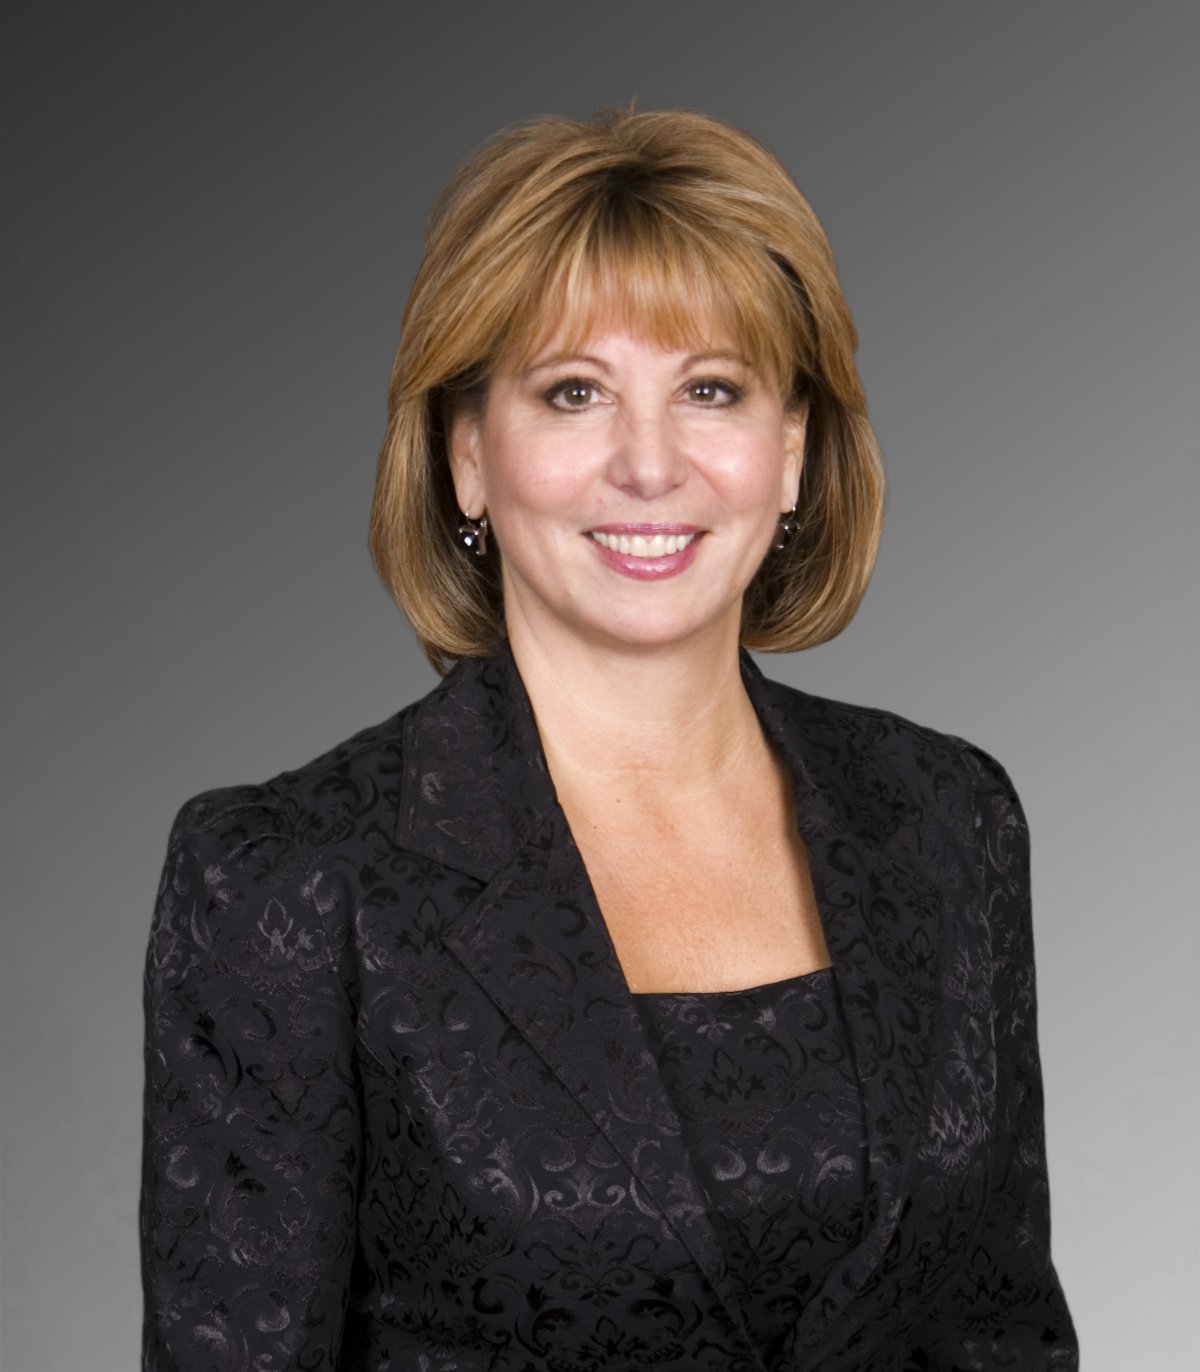 Surrey Mayor Dianne Watts